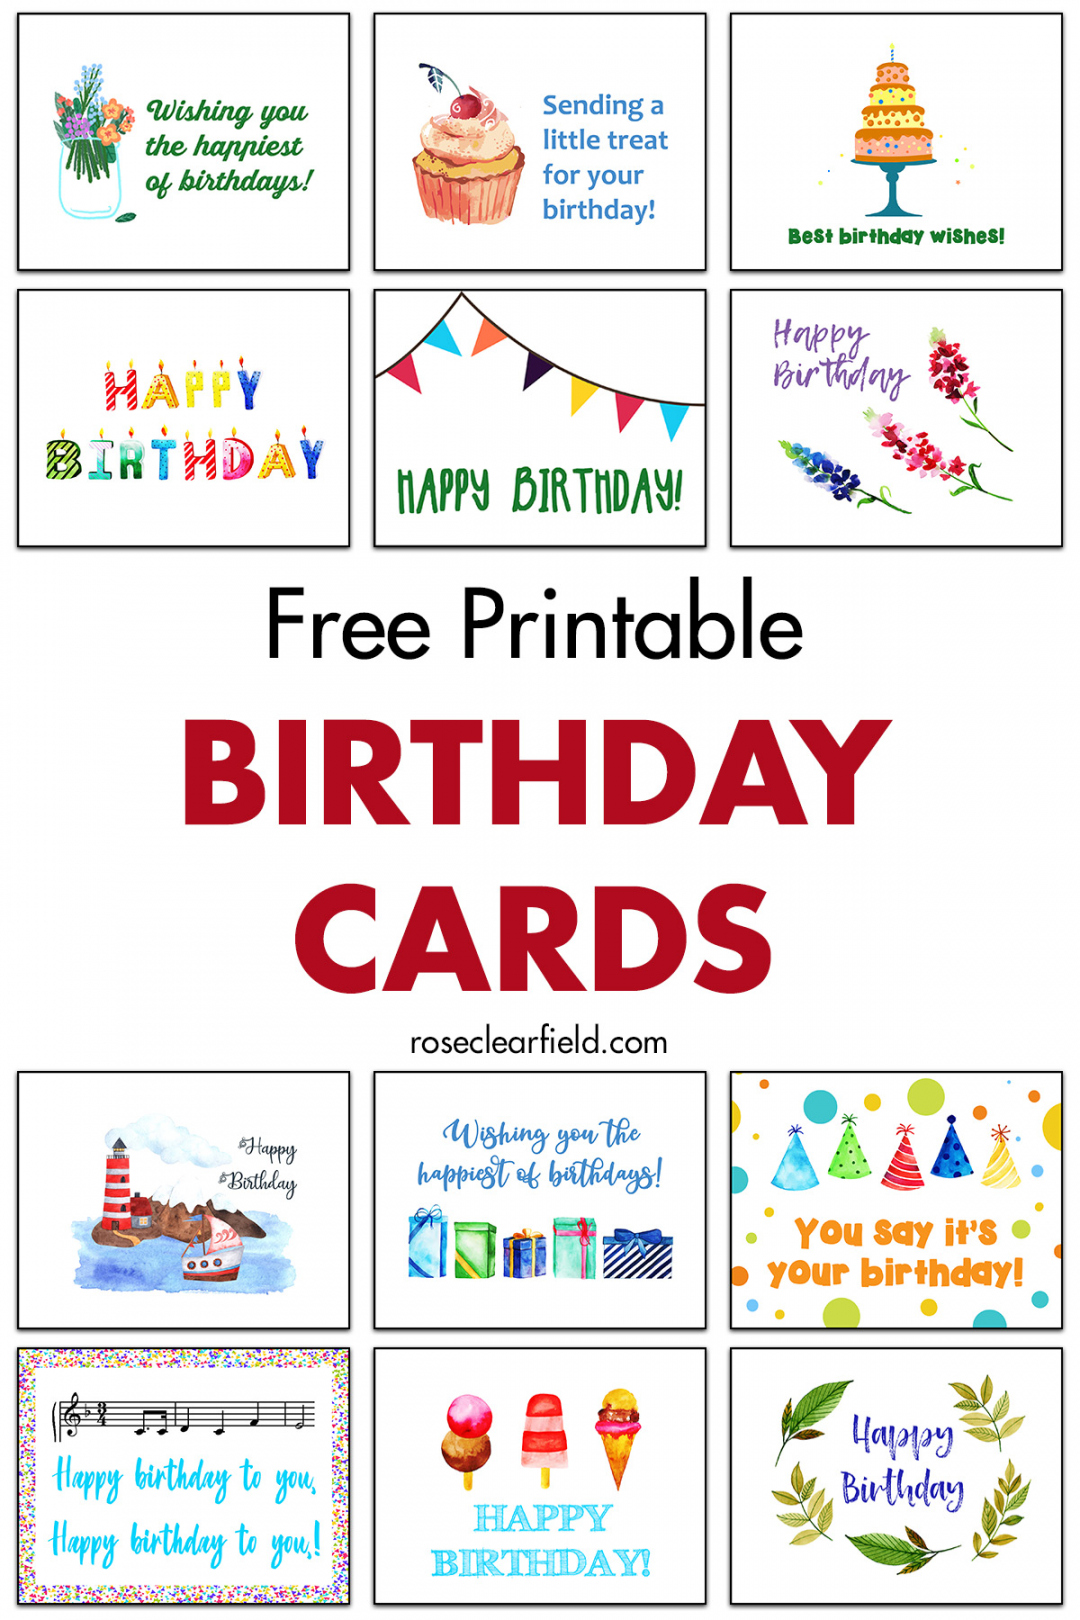 Free Printable Greeting Cards - Printable - Free Printable Birthday Cards - Rose Clearfield